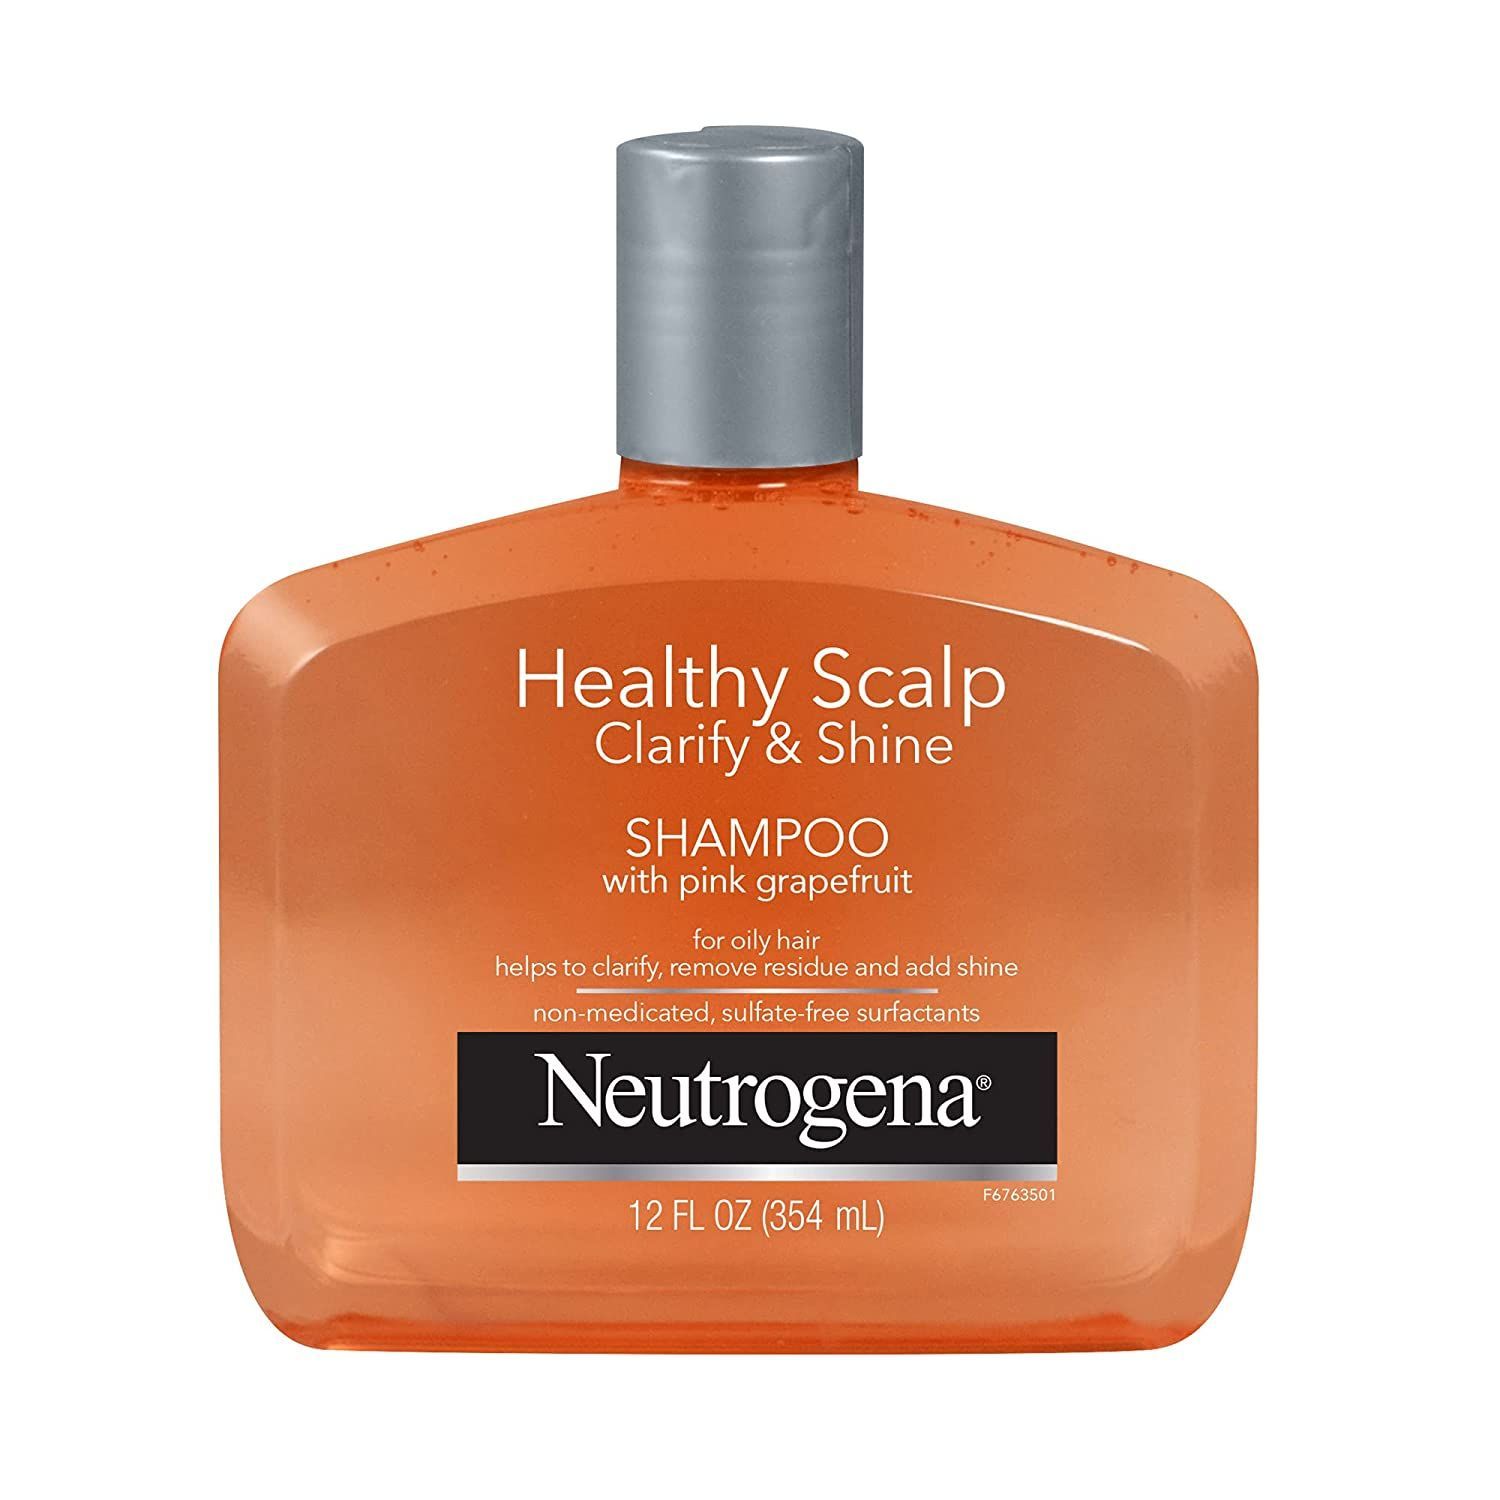 Healthy Scalp Clarify & Shine Shampoo